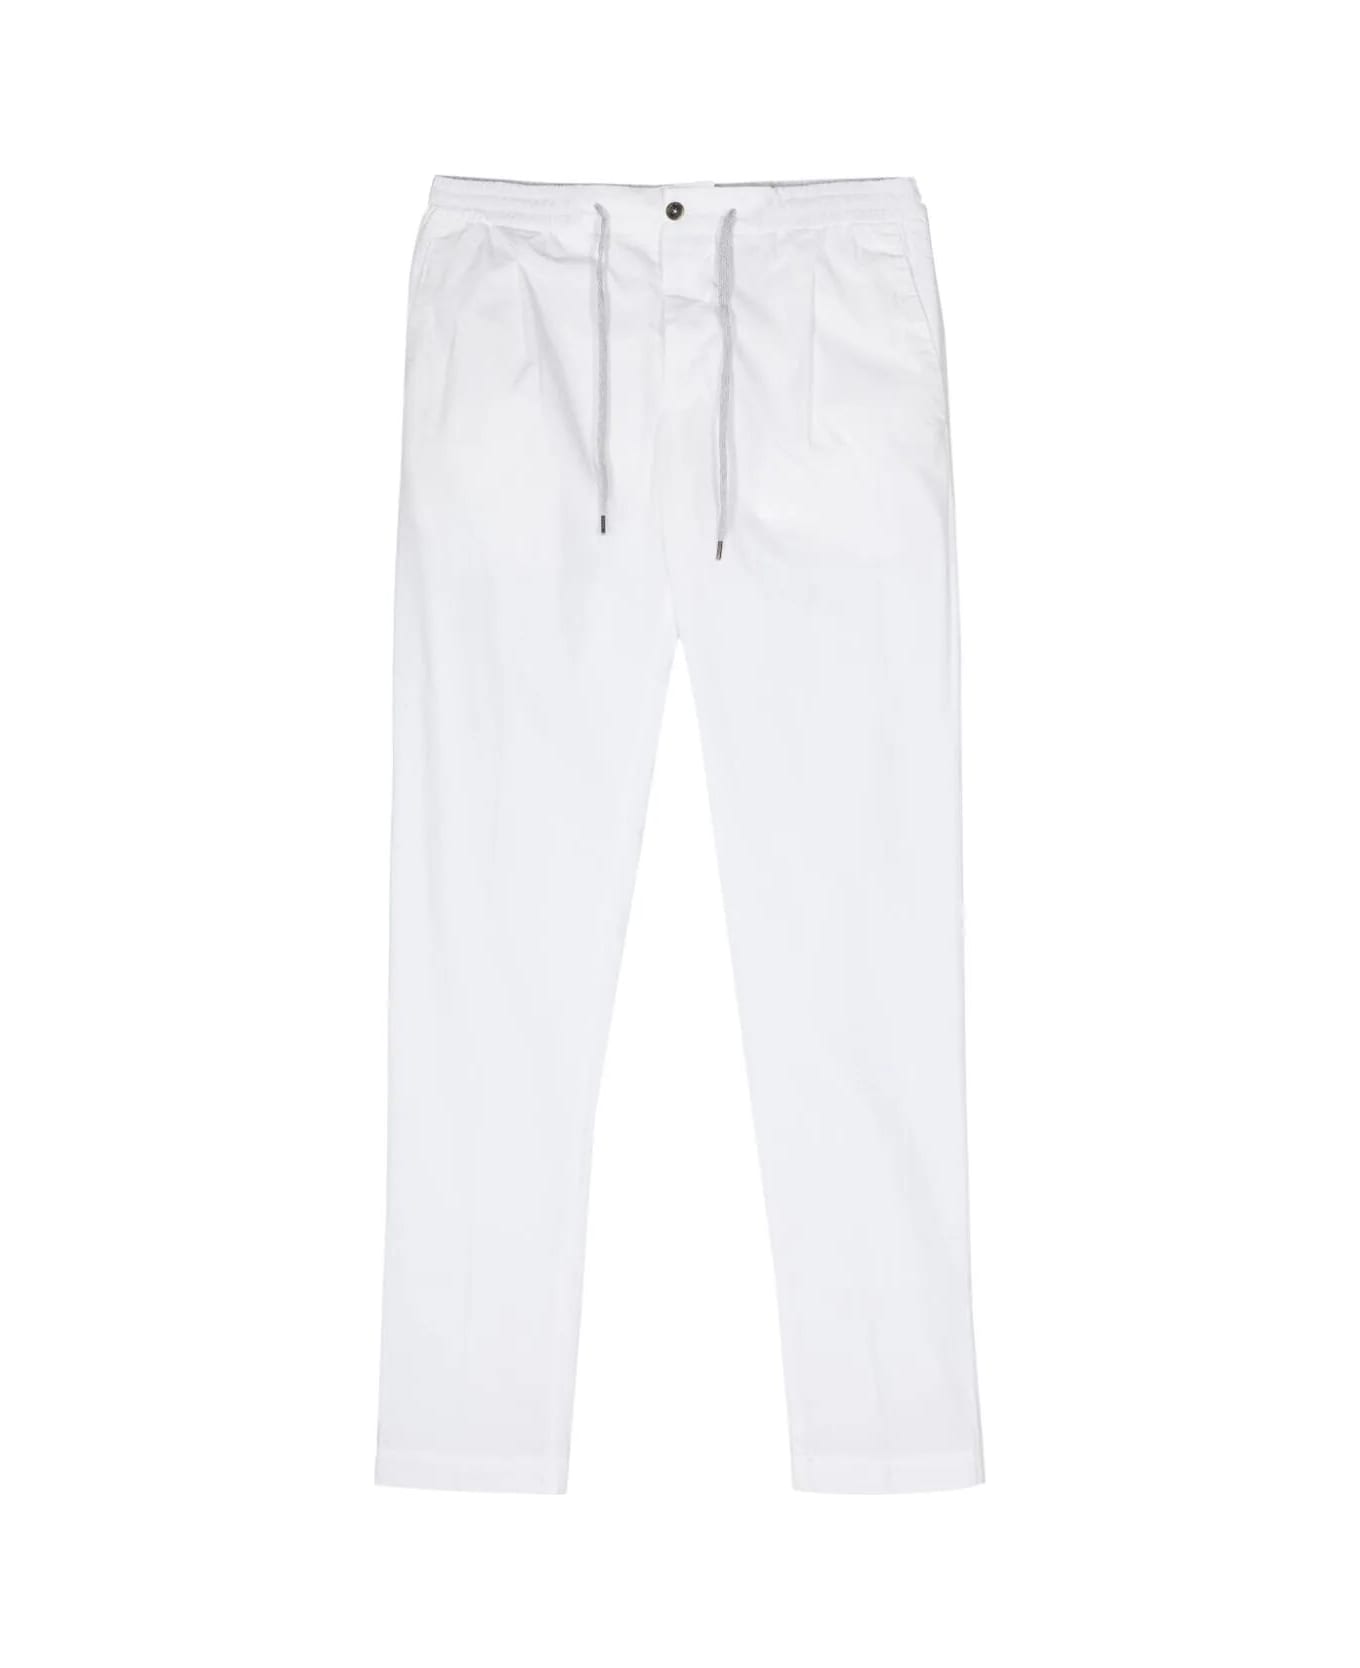 PT Torino Double Dye Stretch Light Popeline Soft Jogging One Pleats Pants - White